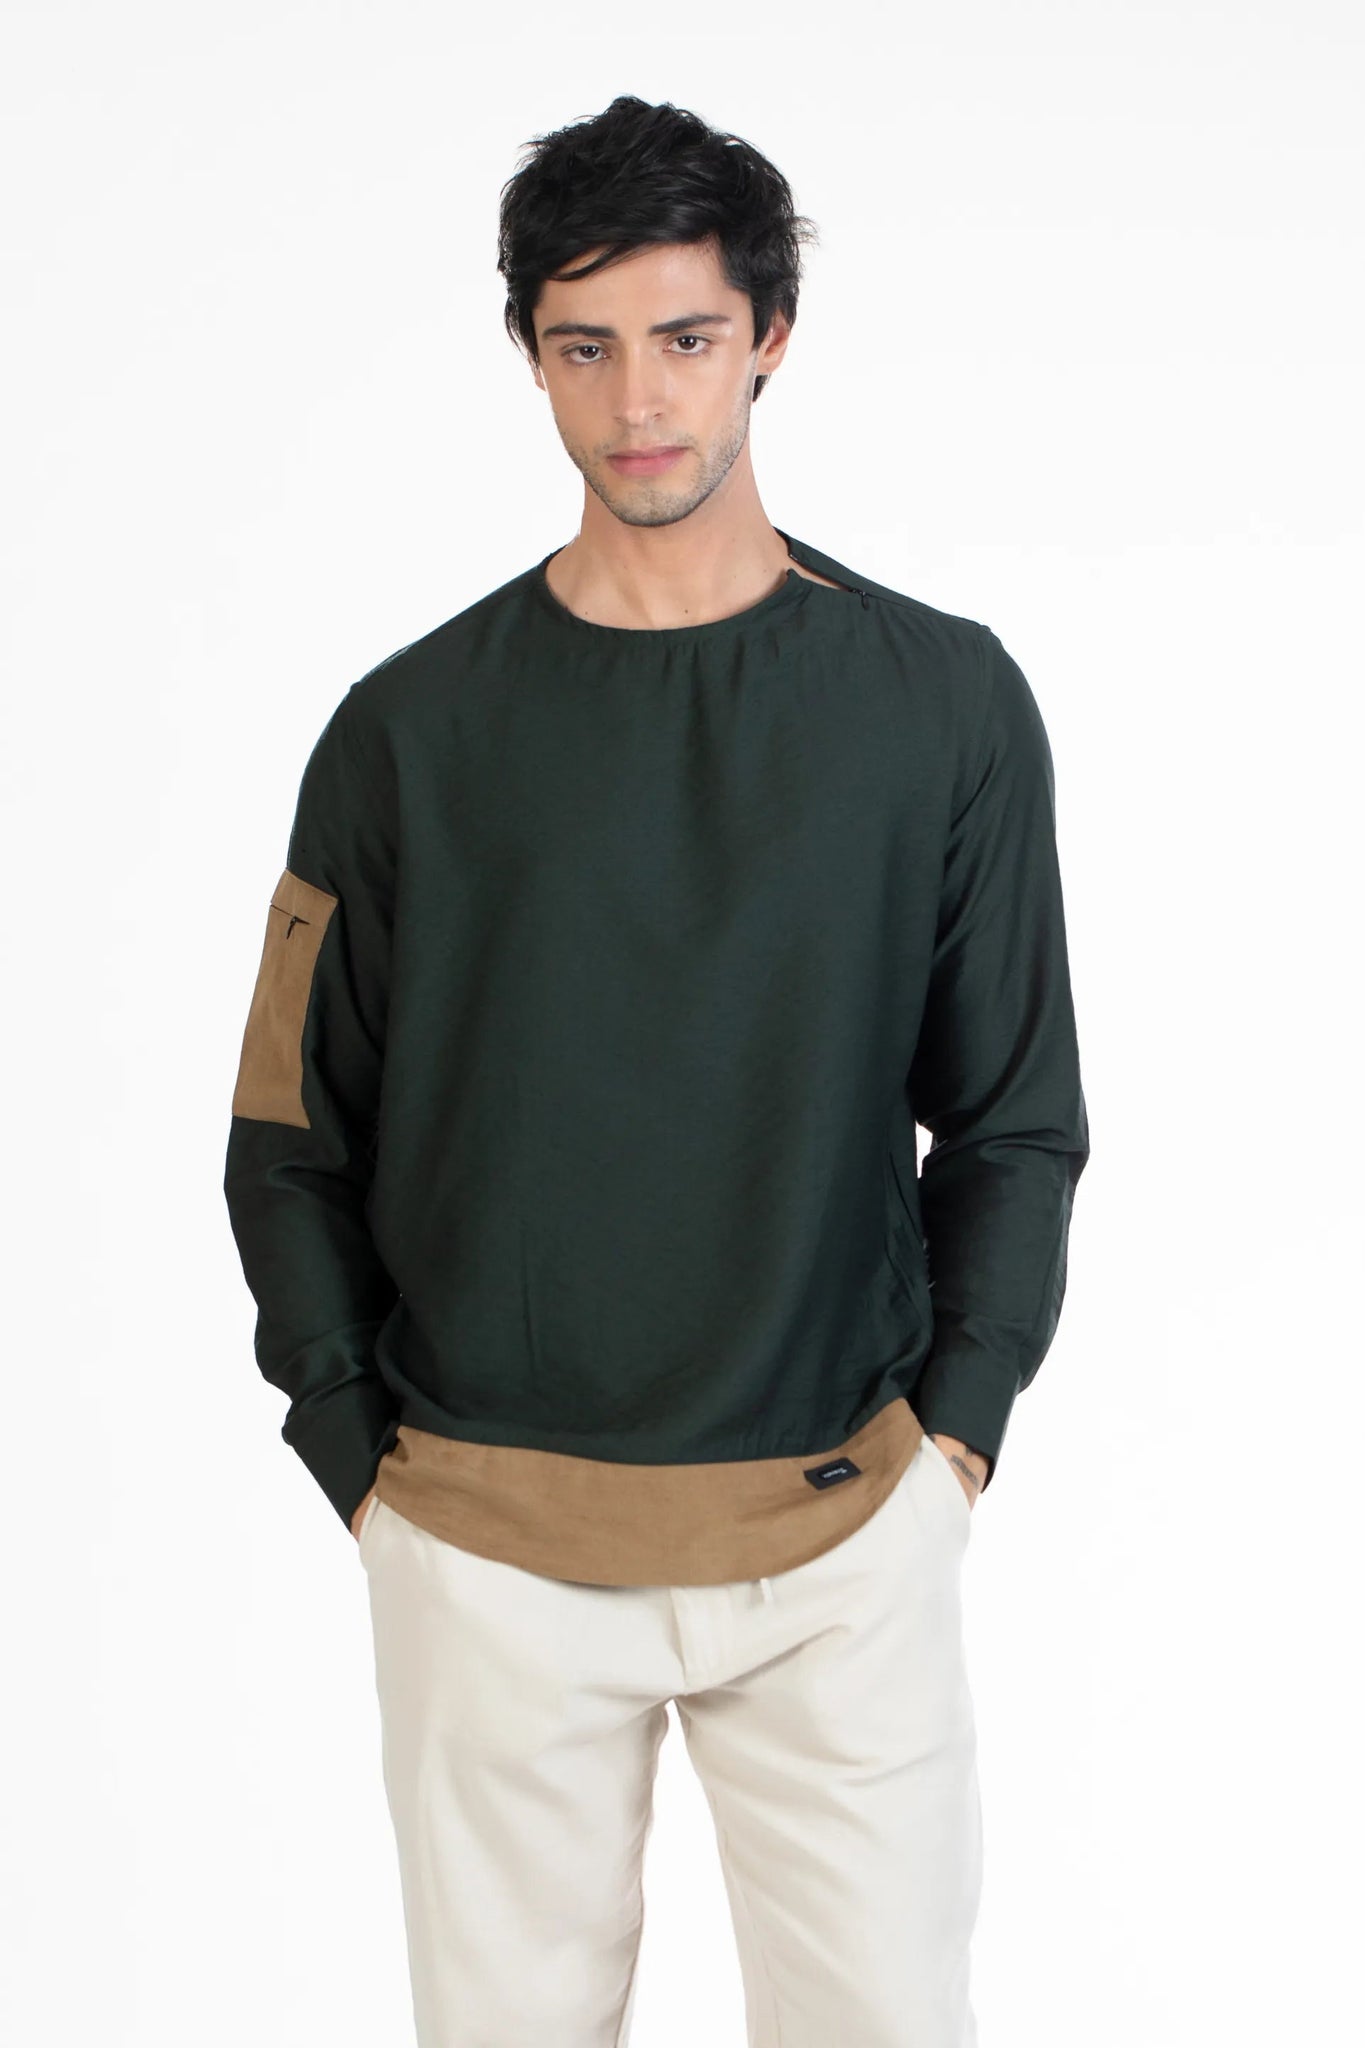 Buy Sleeve Pocket Crushed Shirt Online